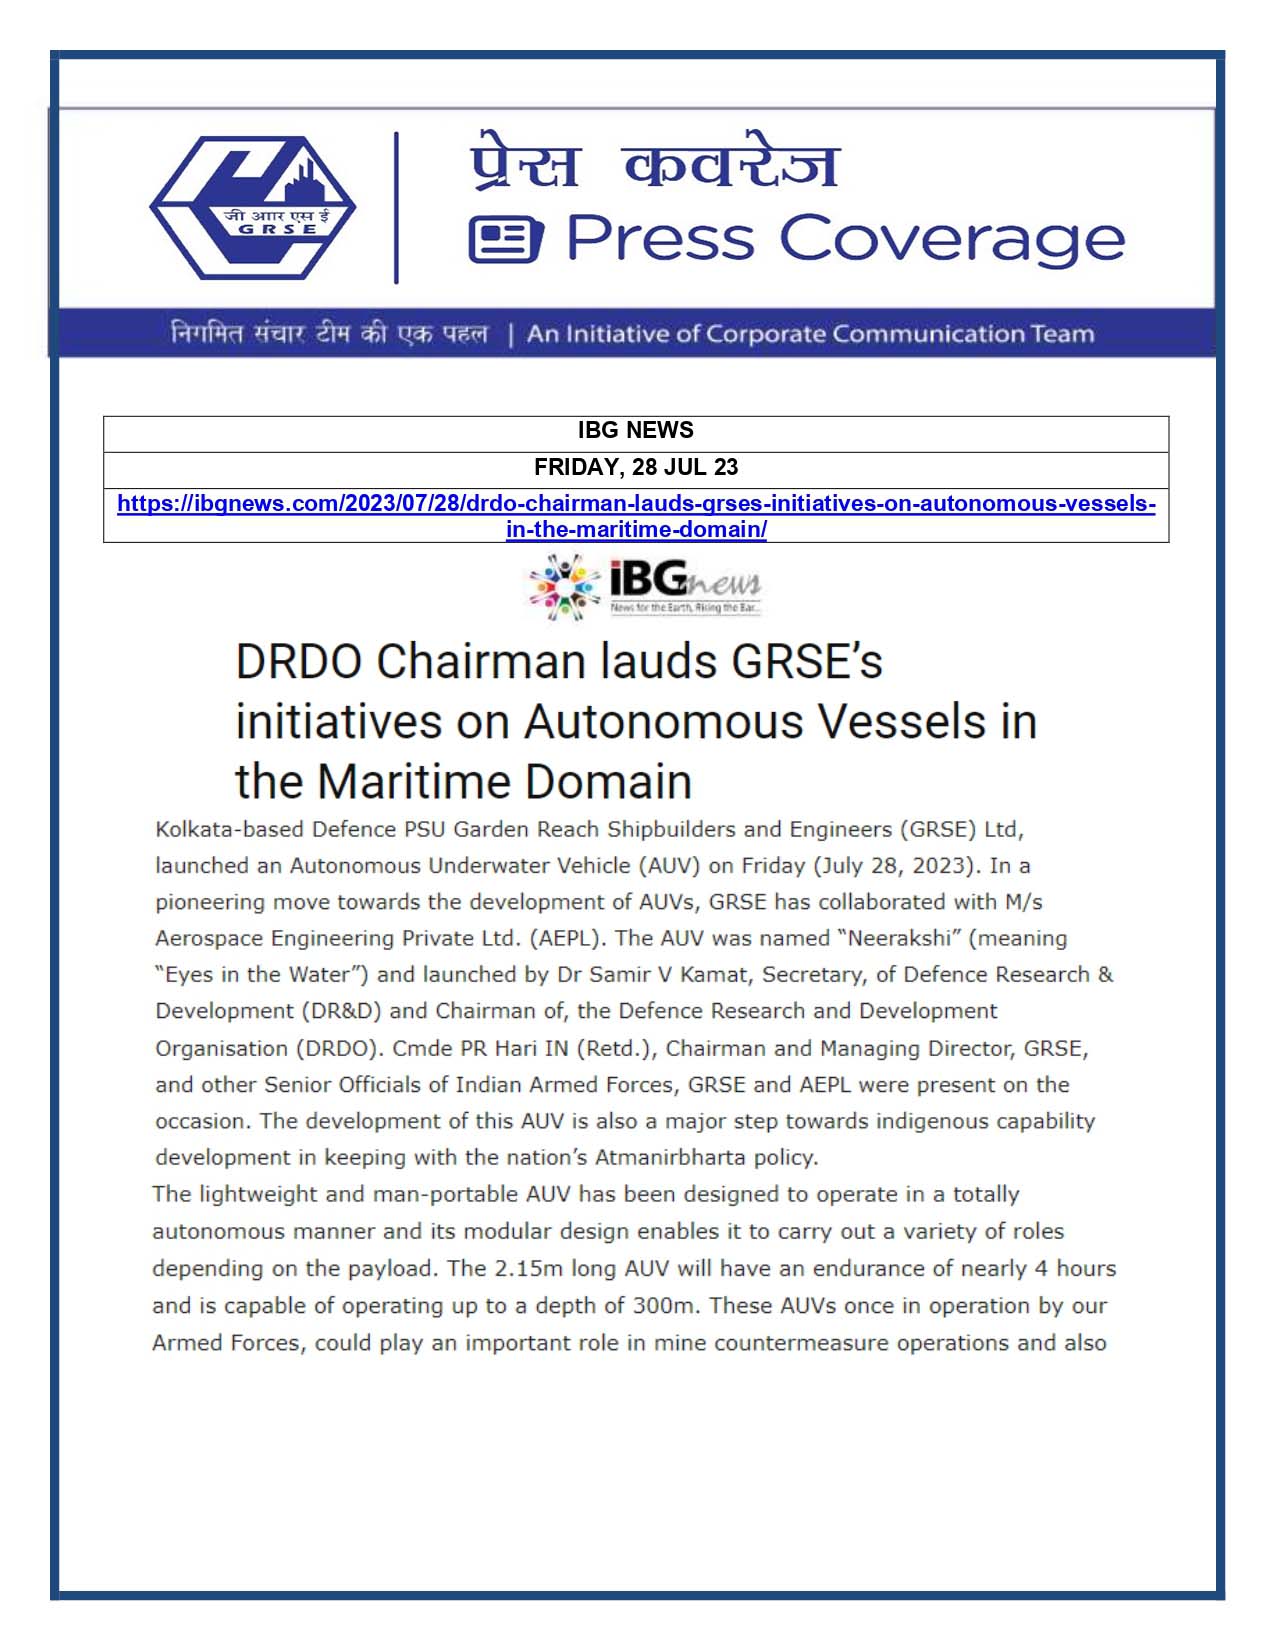 Press Coverage : IBG News, 28 Jul 23 : DRDO Chairman lauds GRSE's initiative on Autonomous Vessels in the Maritime Domain